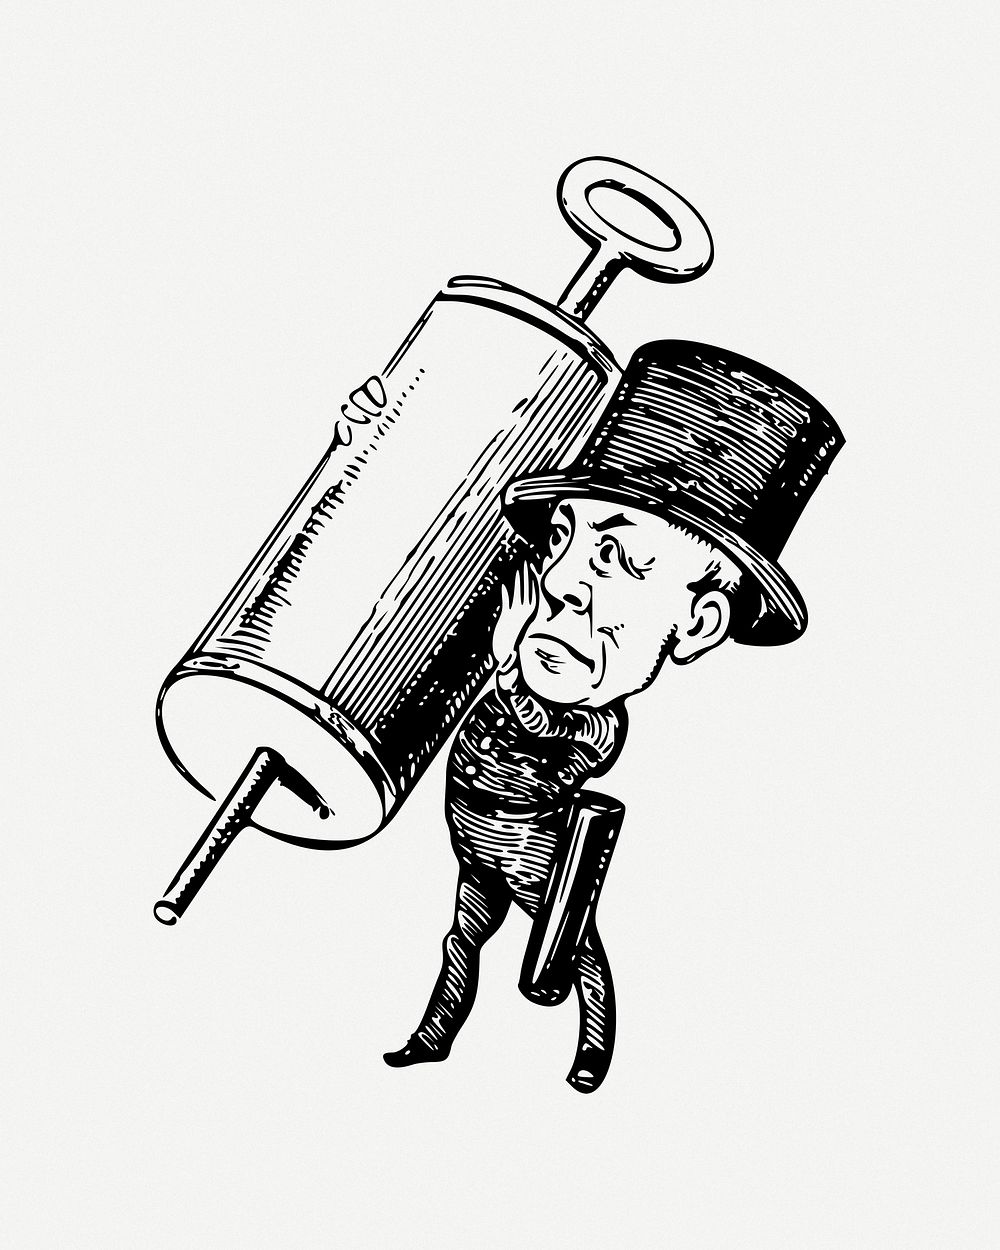 Man with syringe clip art psd. Free public domain CC0 image.